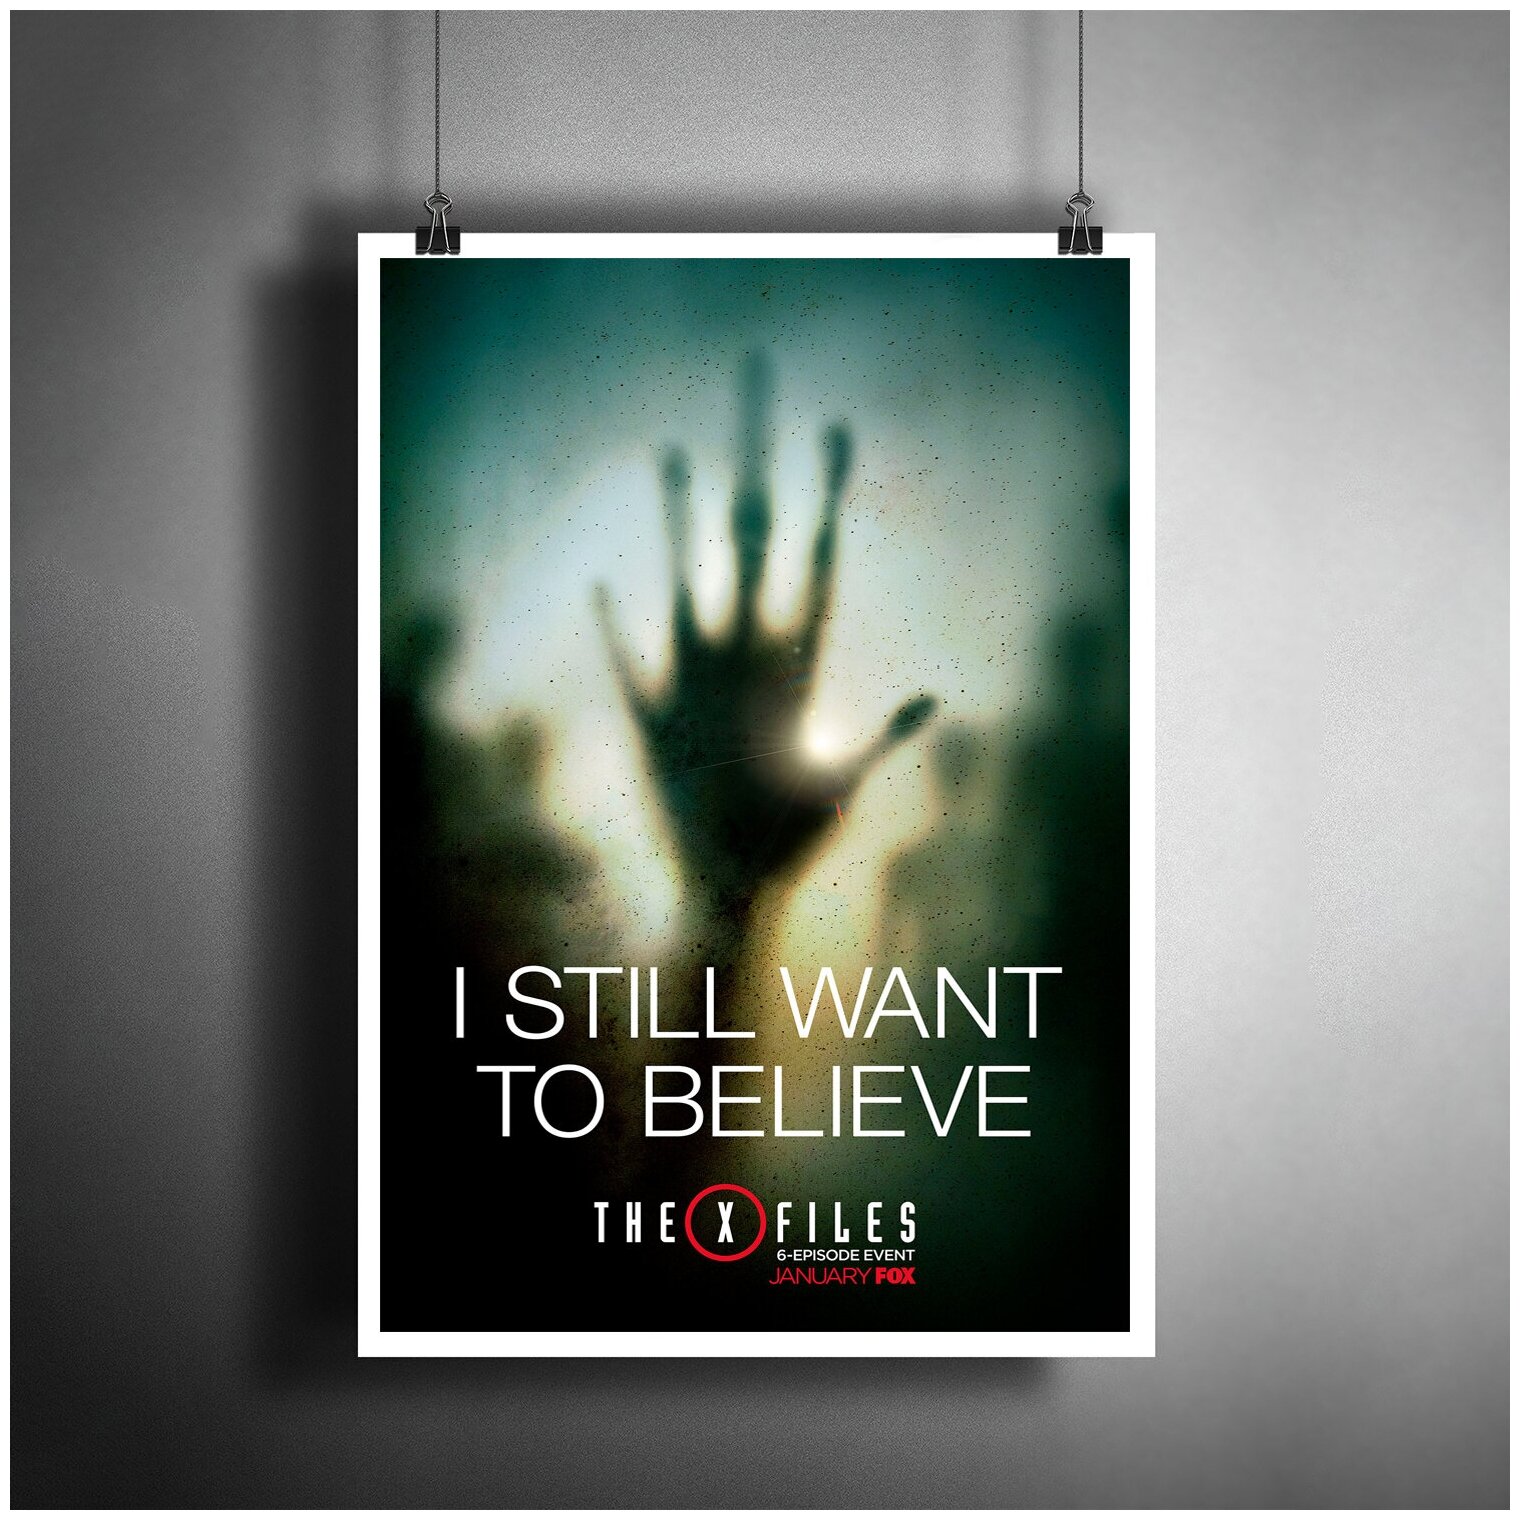 Постер плакат для интерьера "Сериал: Секретные материалы. I still want to believe"/ Декор дома, офиса, комнаты A3 (297 x 420 мм)